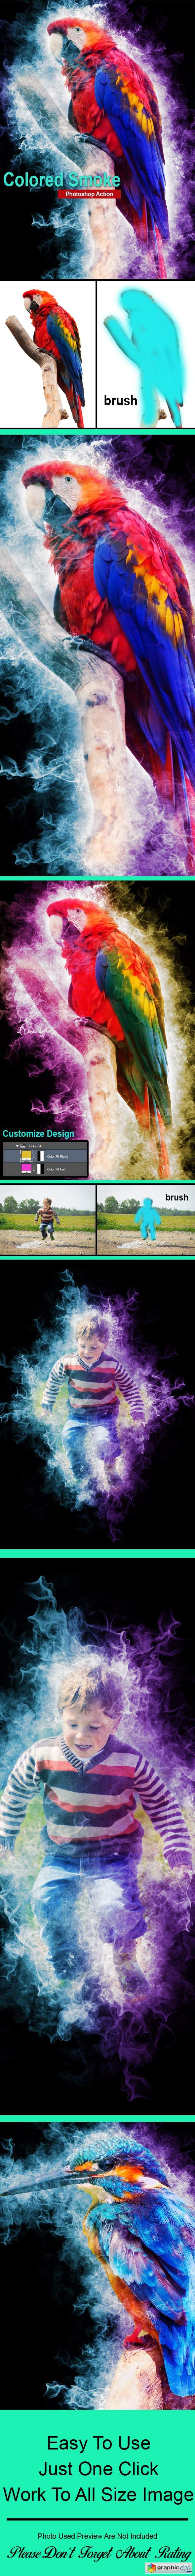 Colored Smoke Photoshop Action